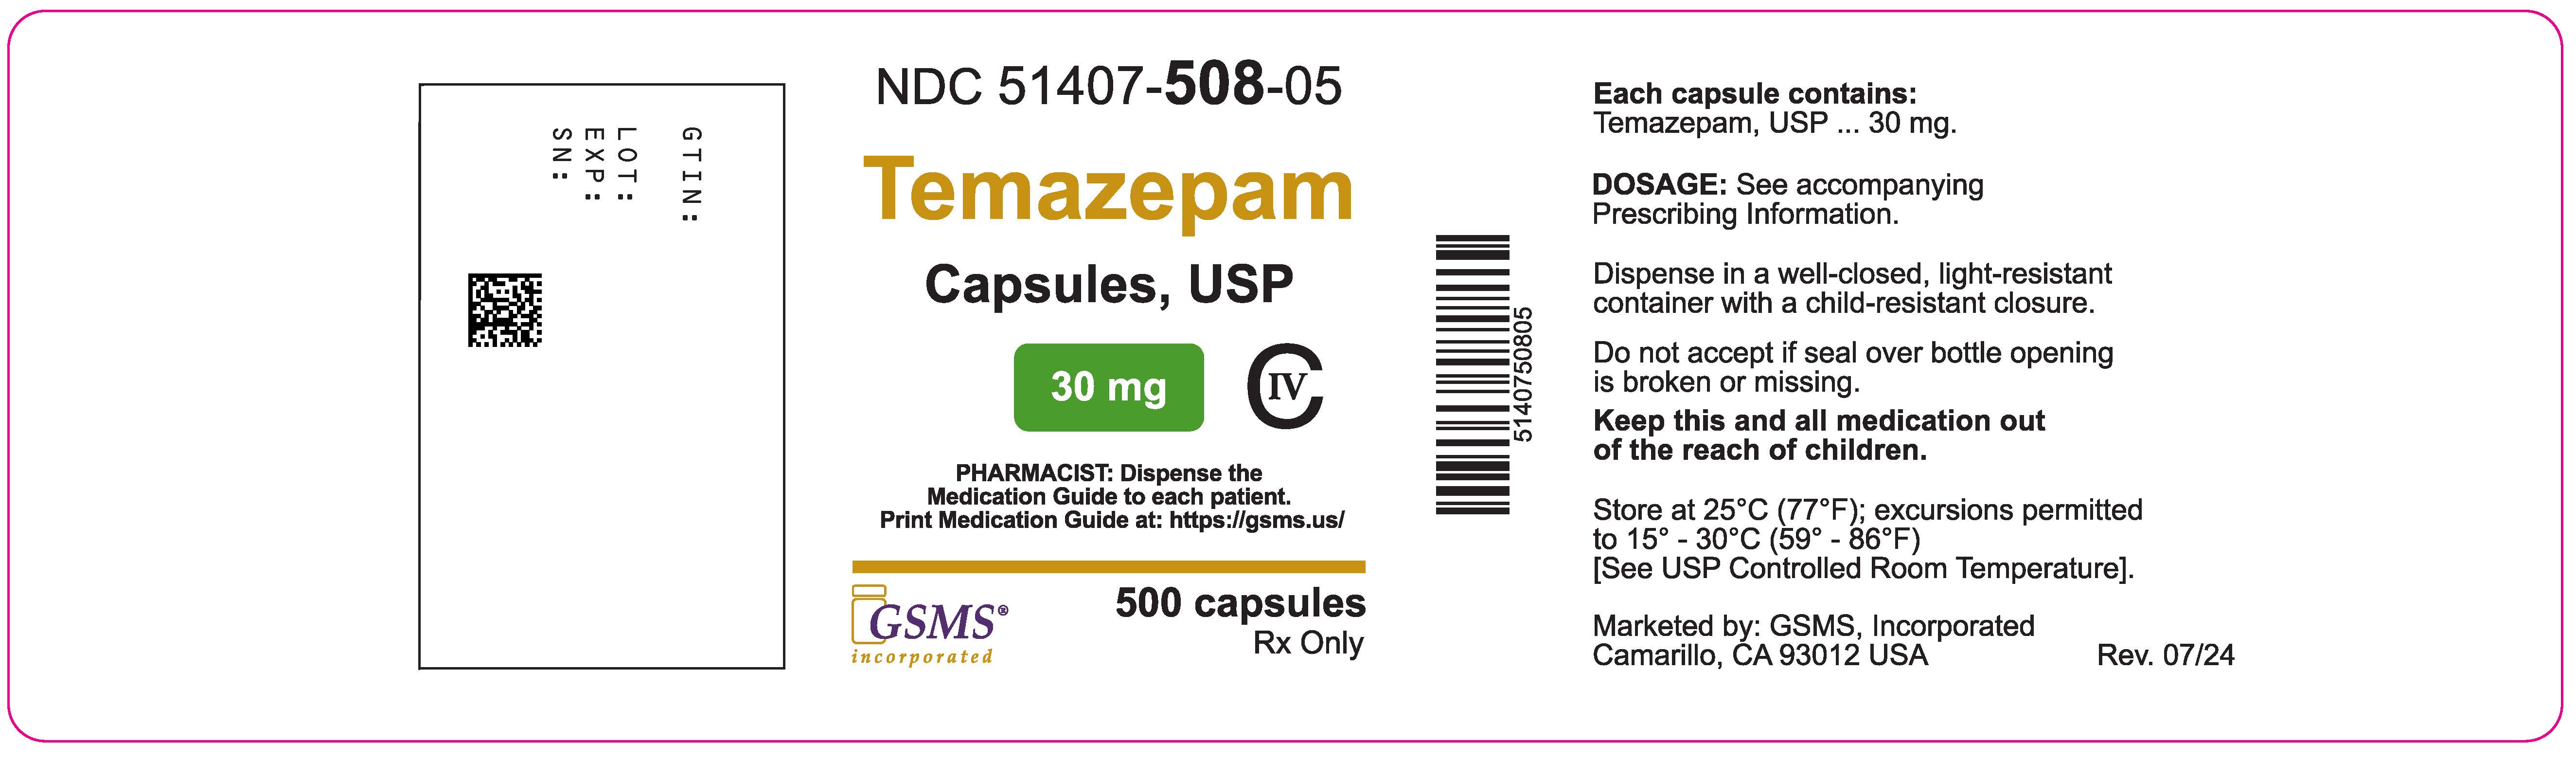 51407-508-05OL - Temazepam 30 mg - Rev. 0724.jpg